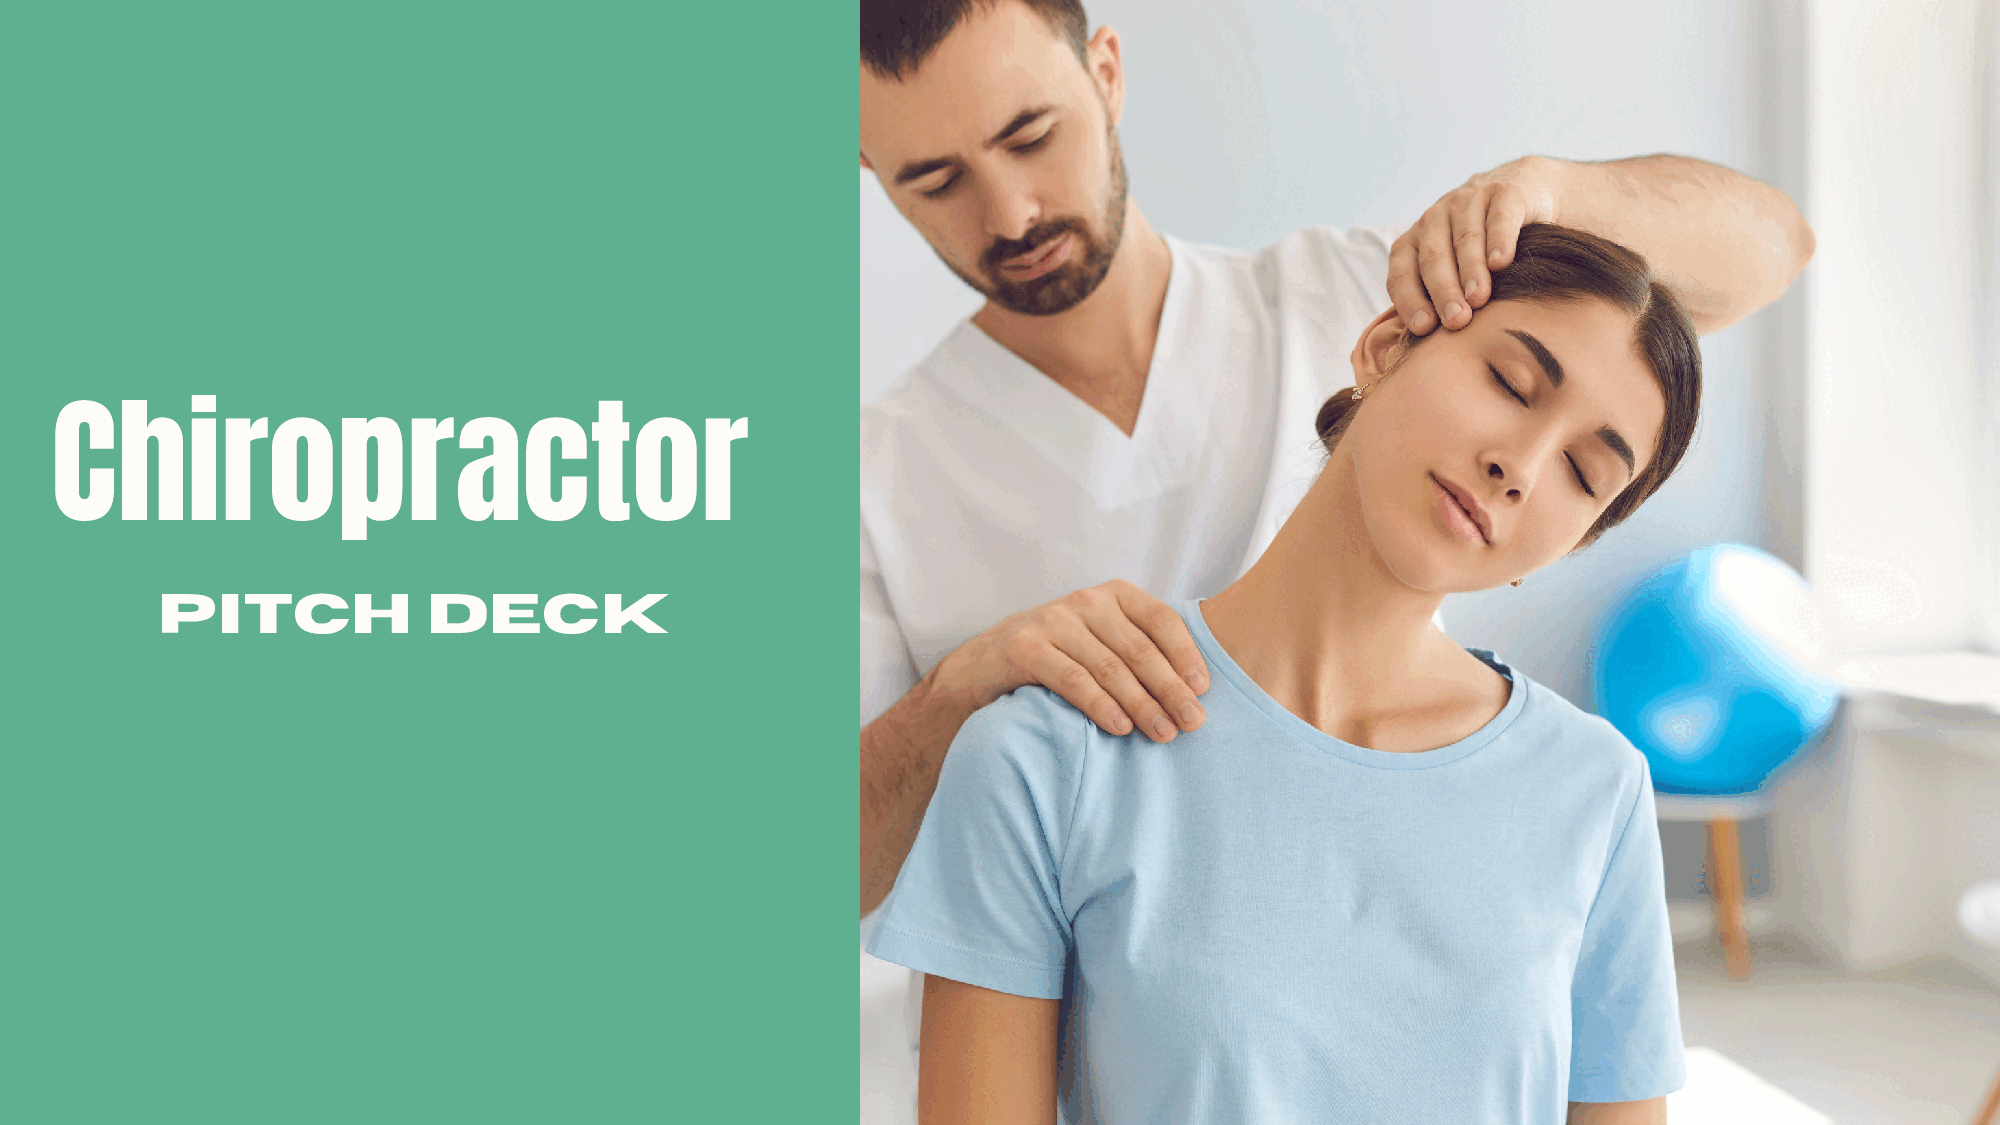 Chiropractor Pitch Deck Template